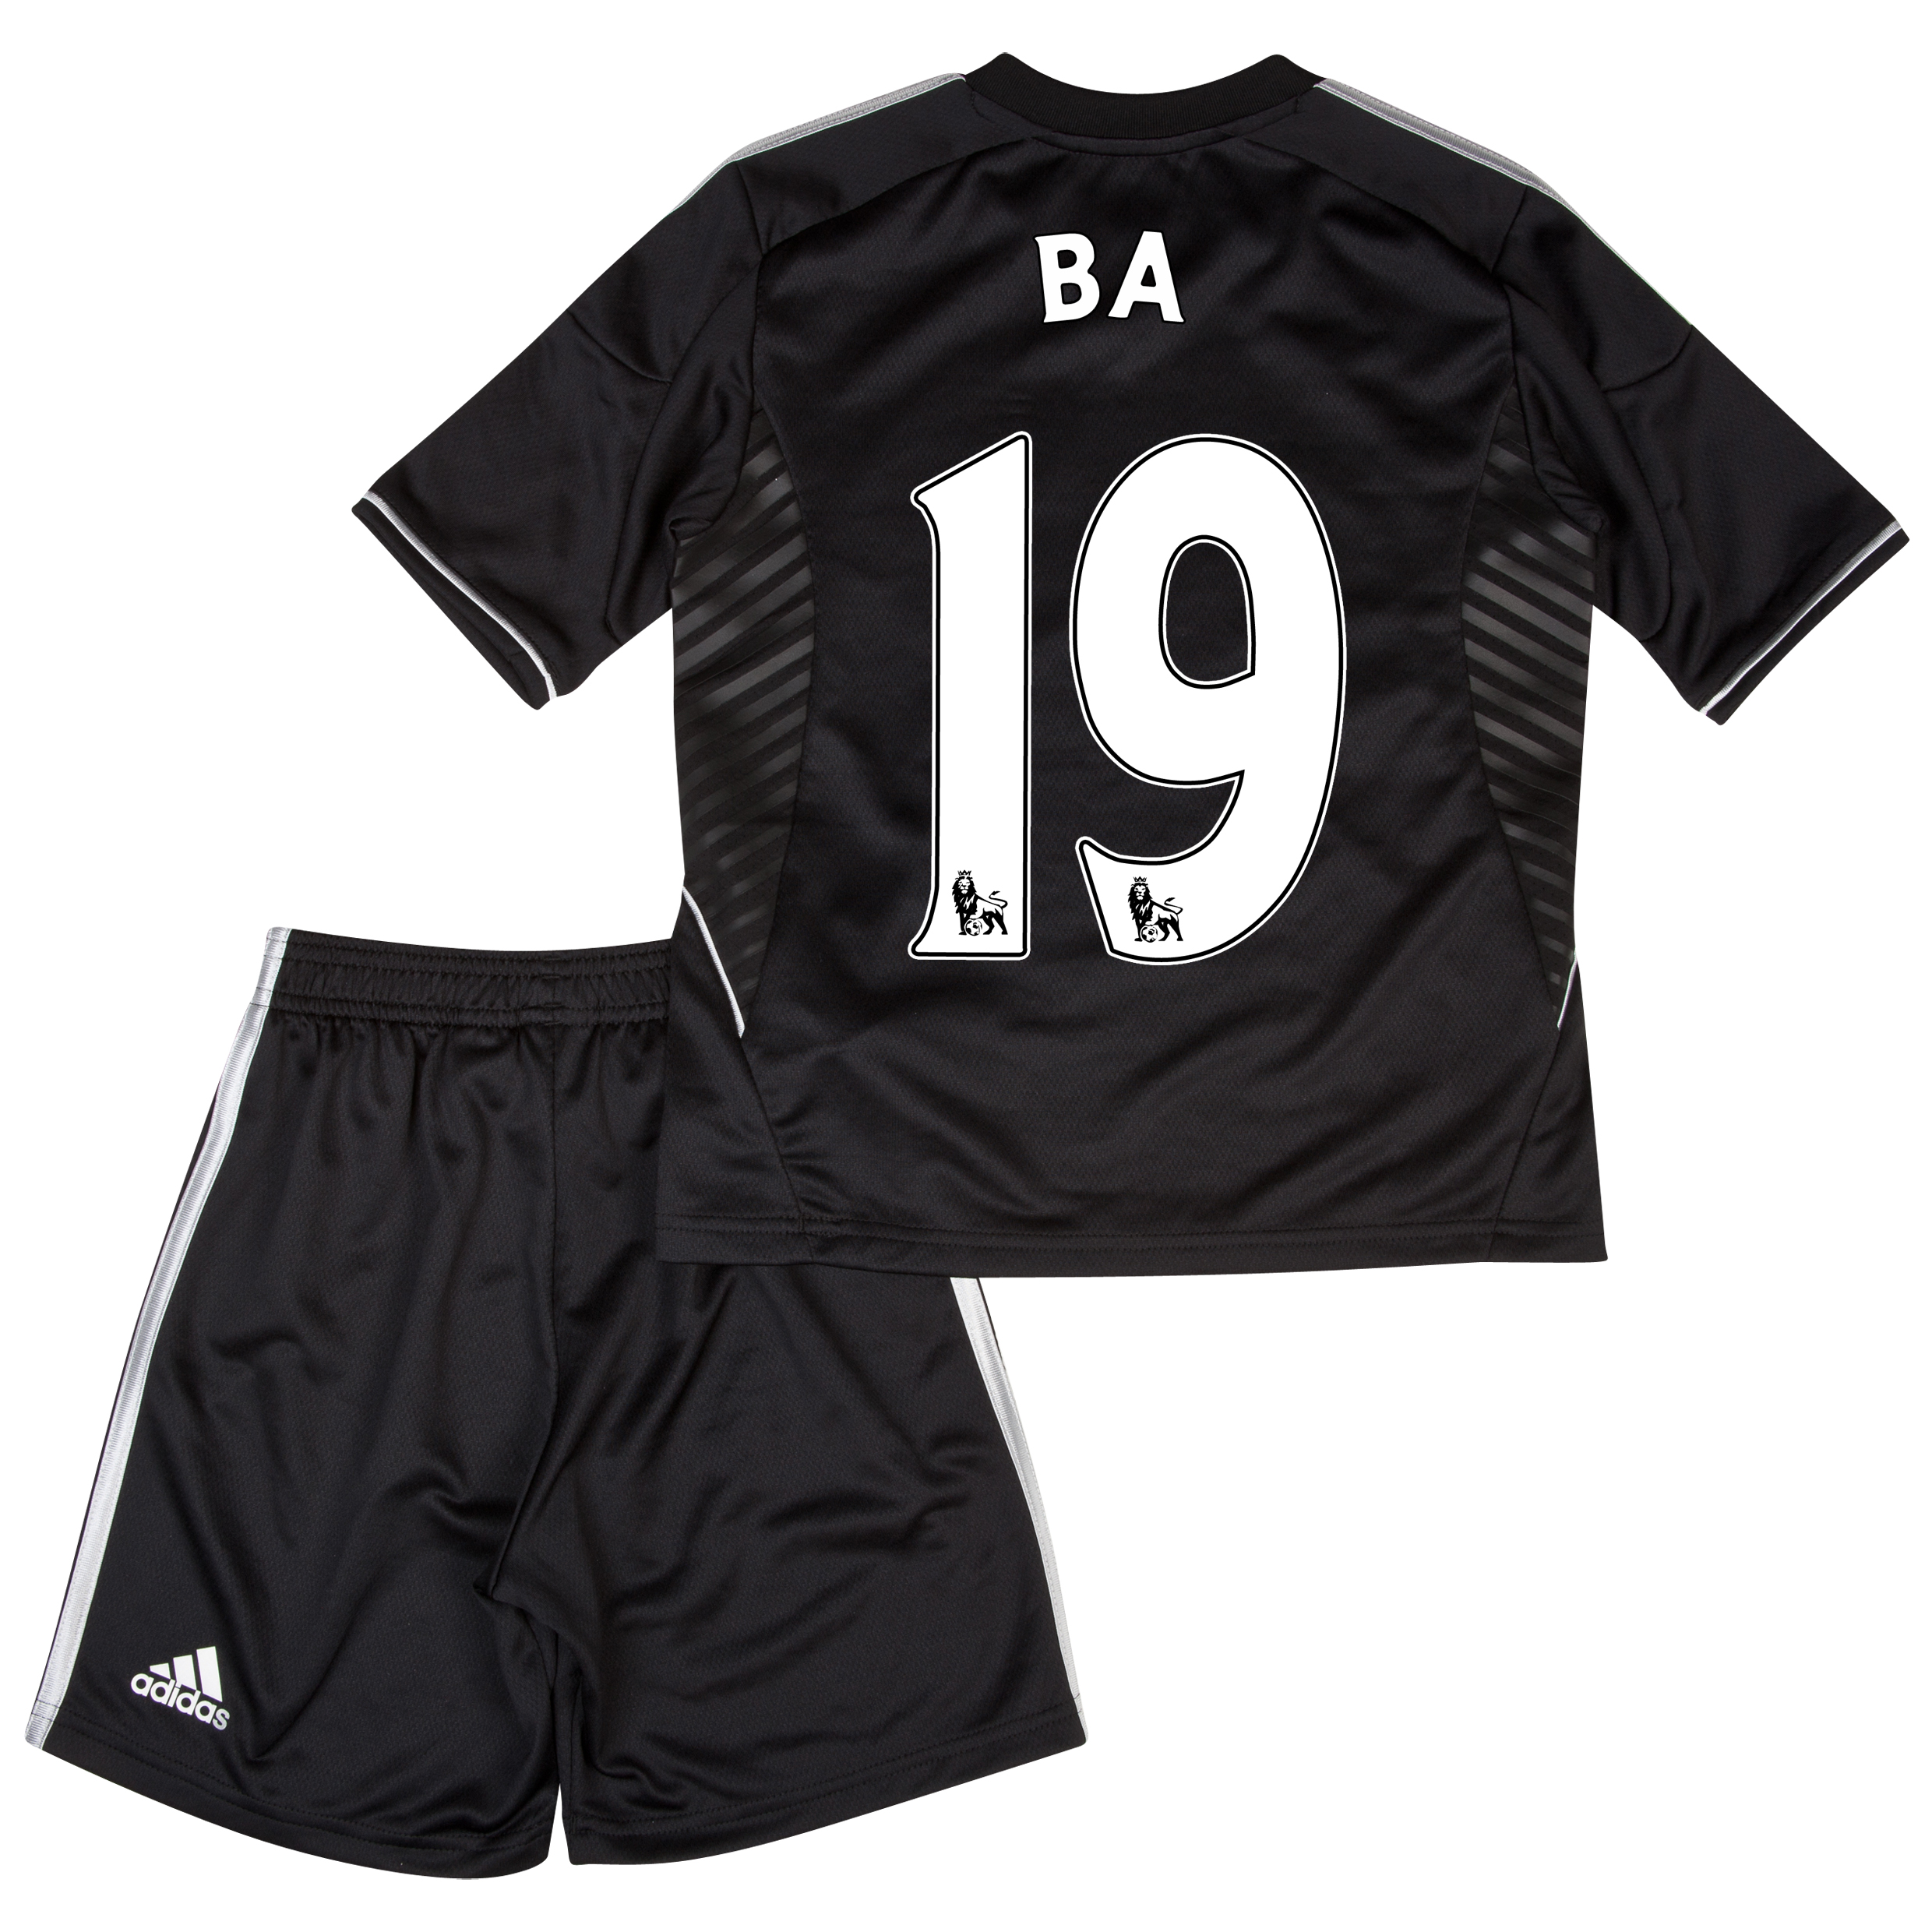 Chelsea Third Mini Kit 2013/14 with Ba 19 printing